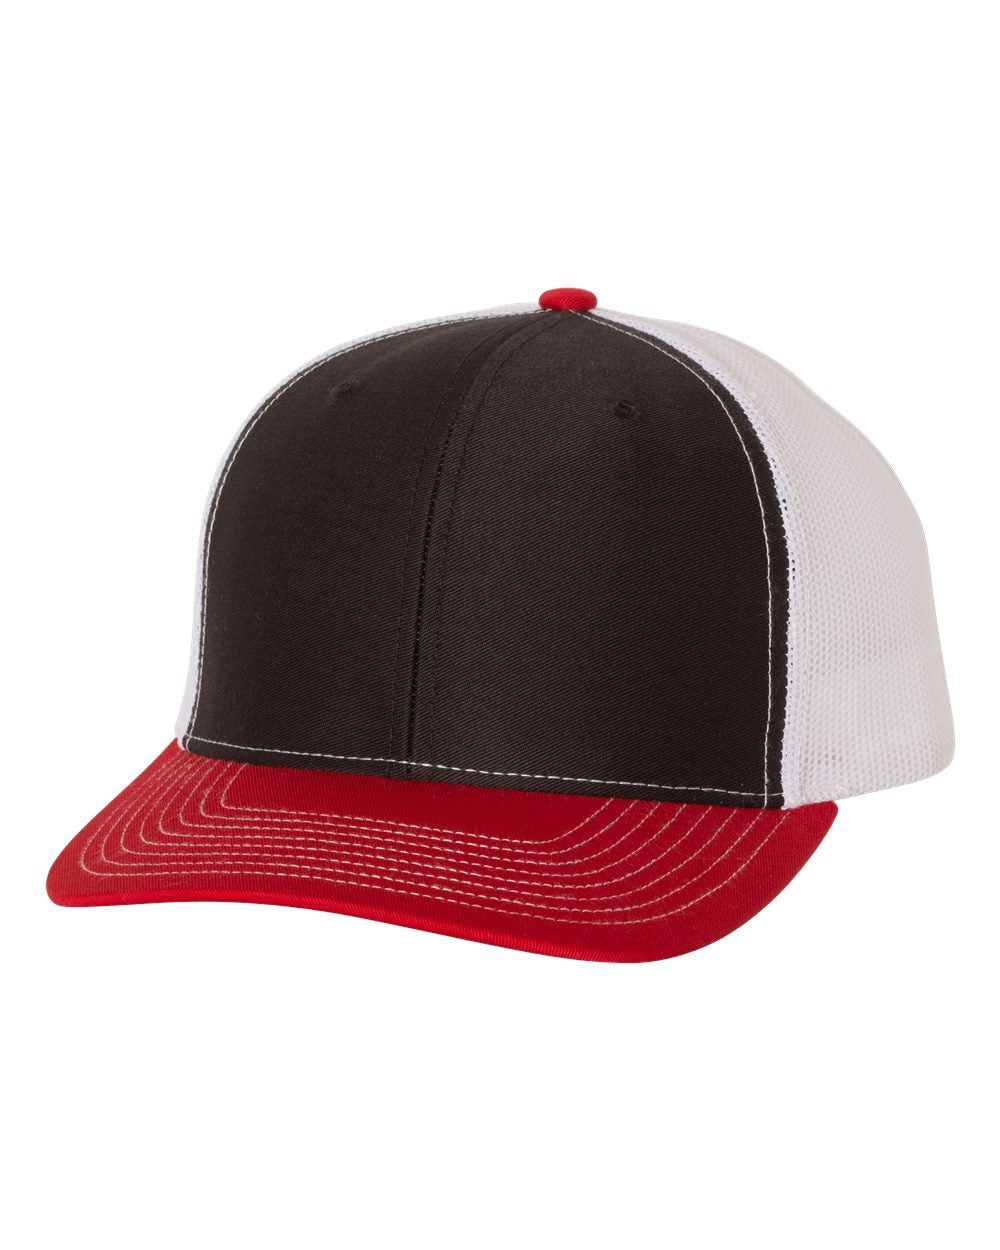 richardson cap black white red